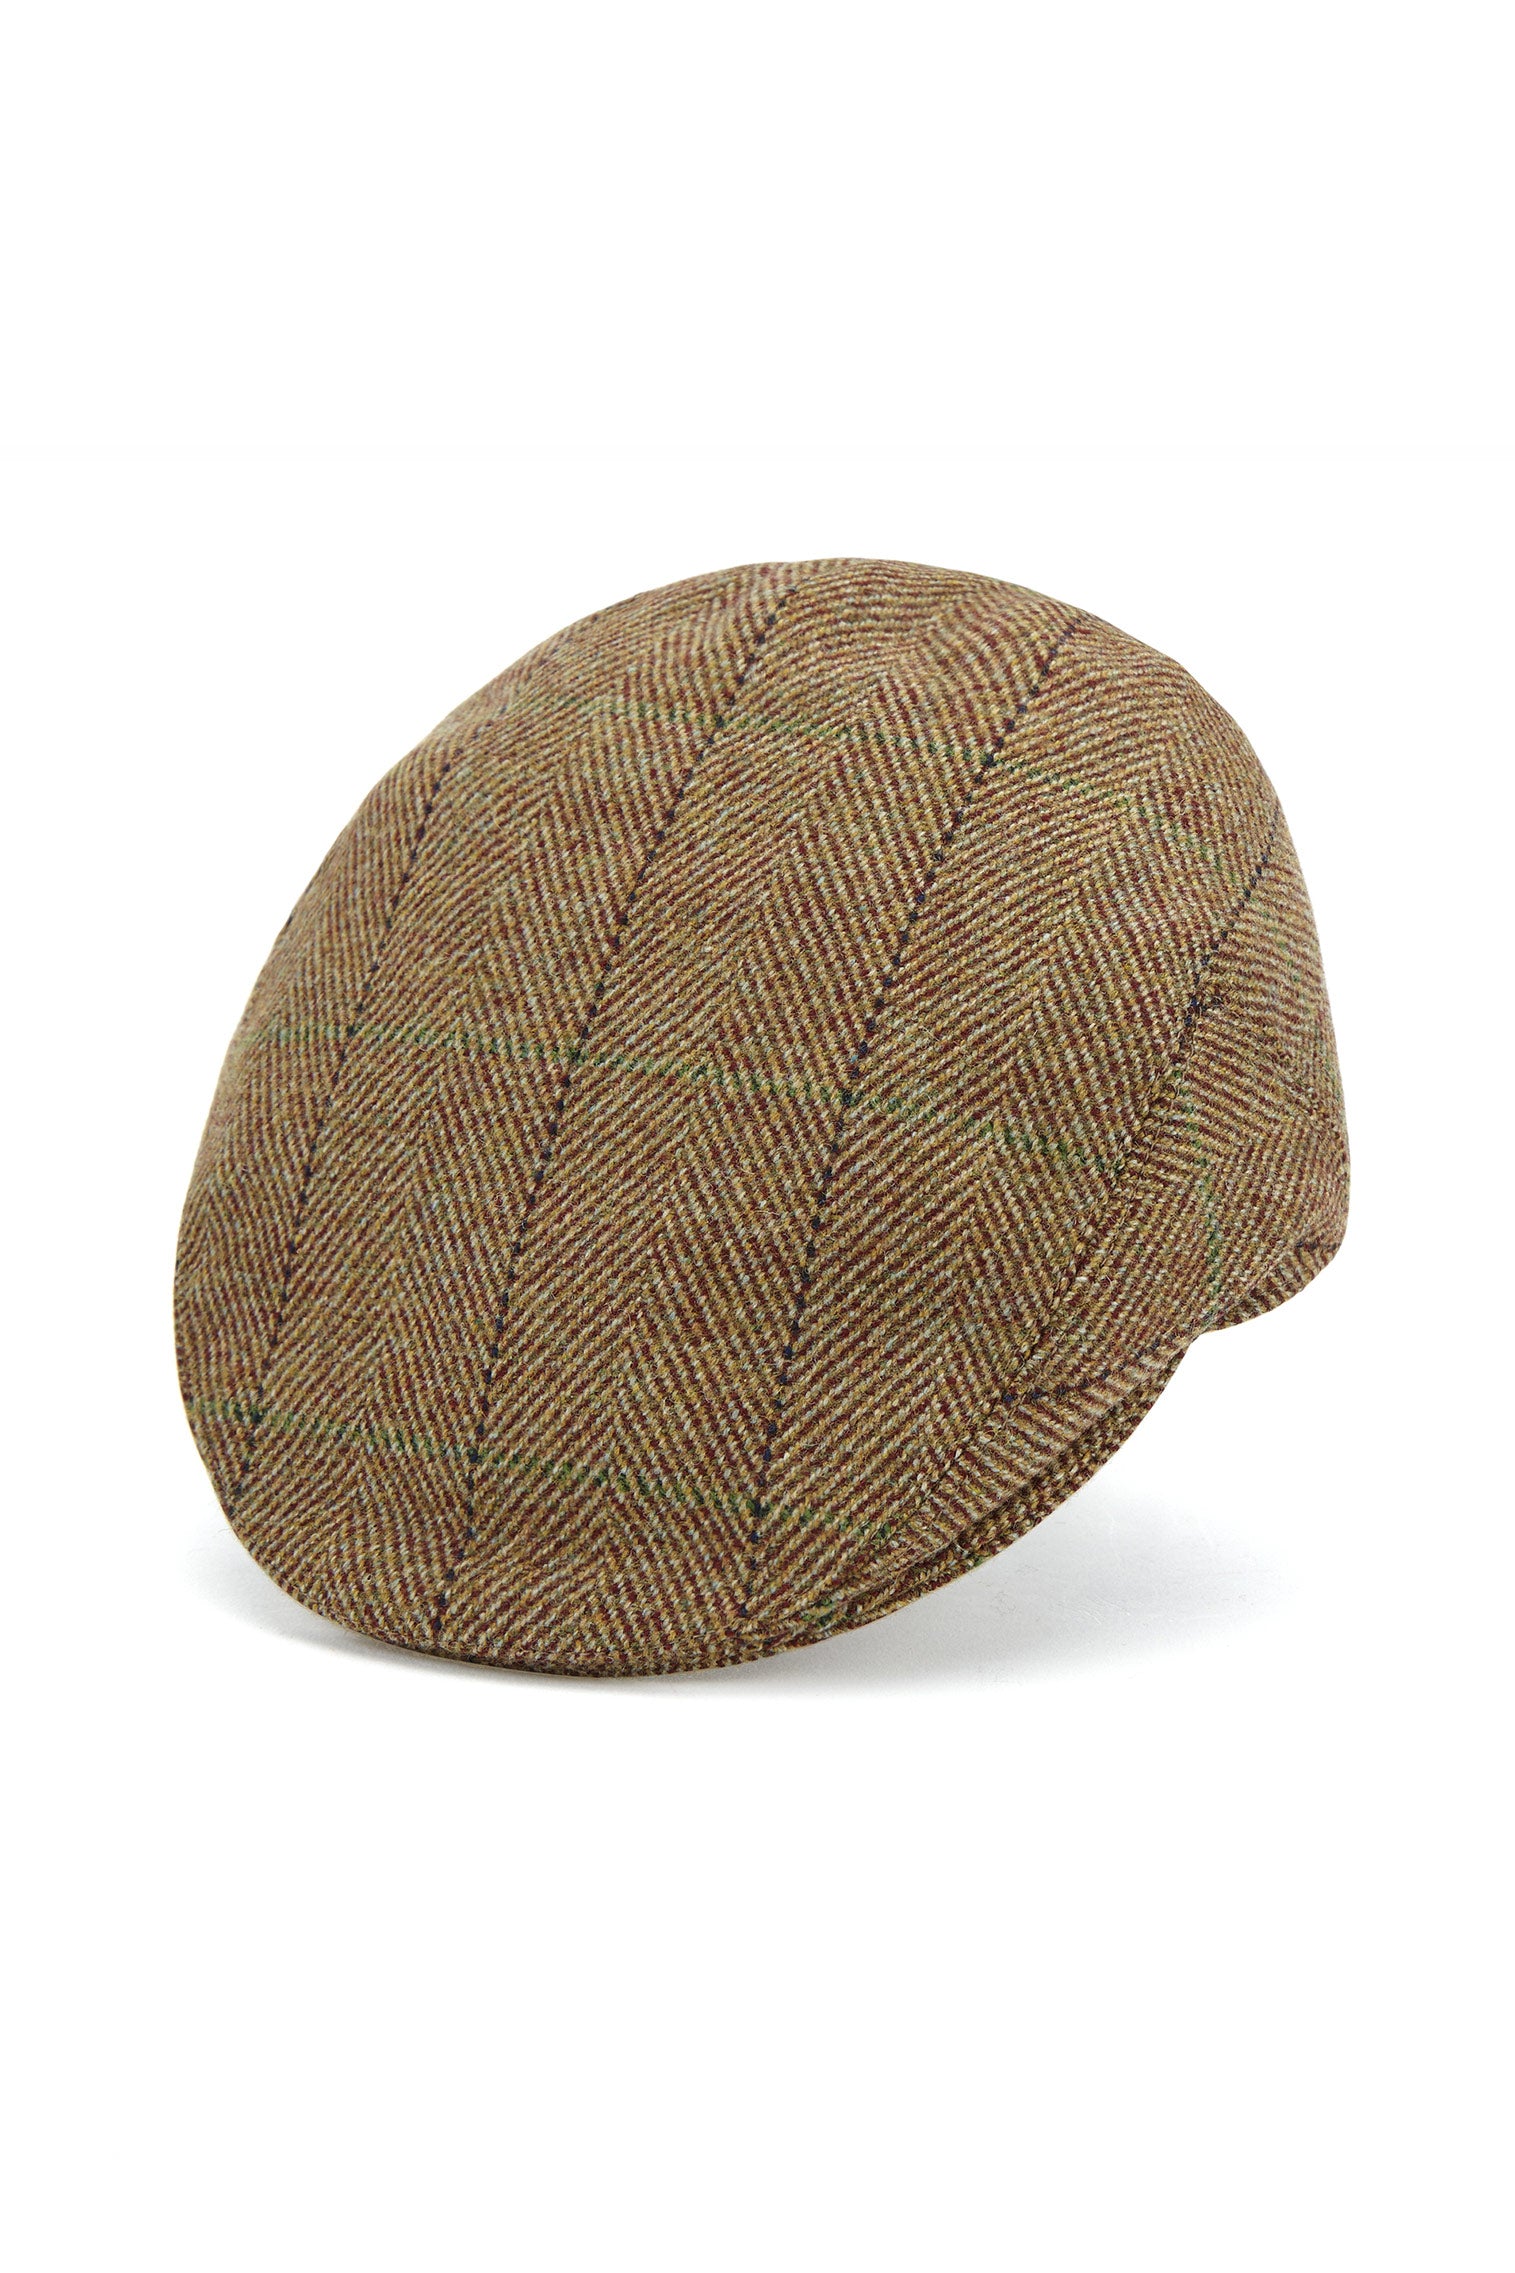 Gill Tweed Flat Cap - Men's Hats - Lock & Co. Hatters London UK